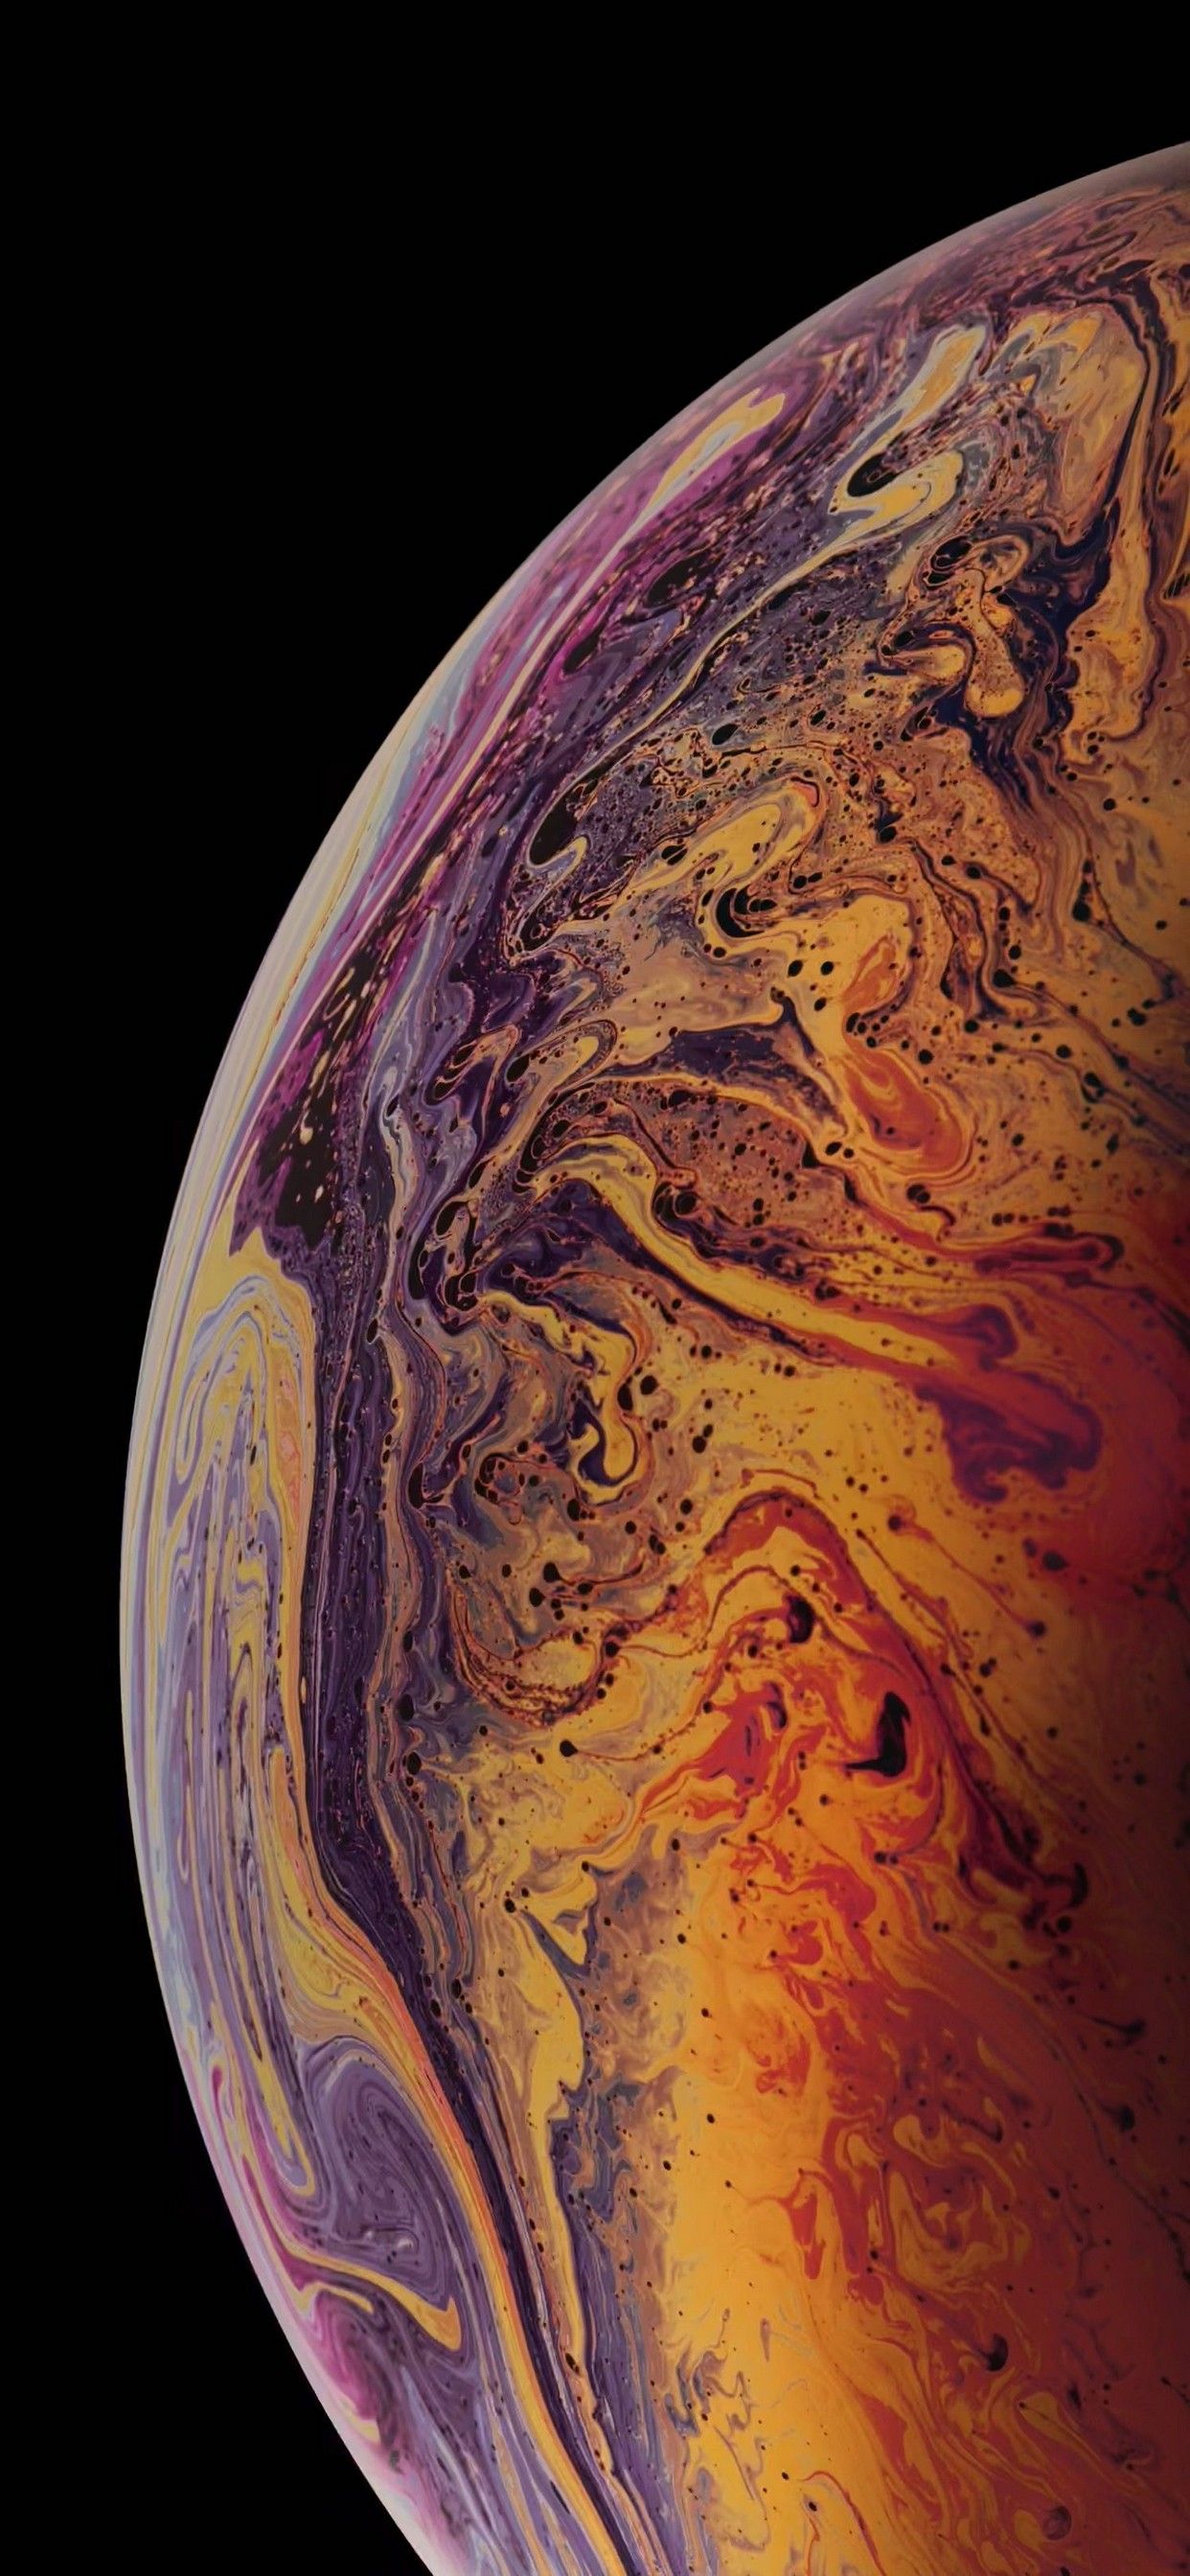 iPhone X Earth Wallpaper